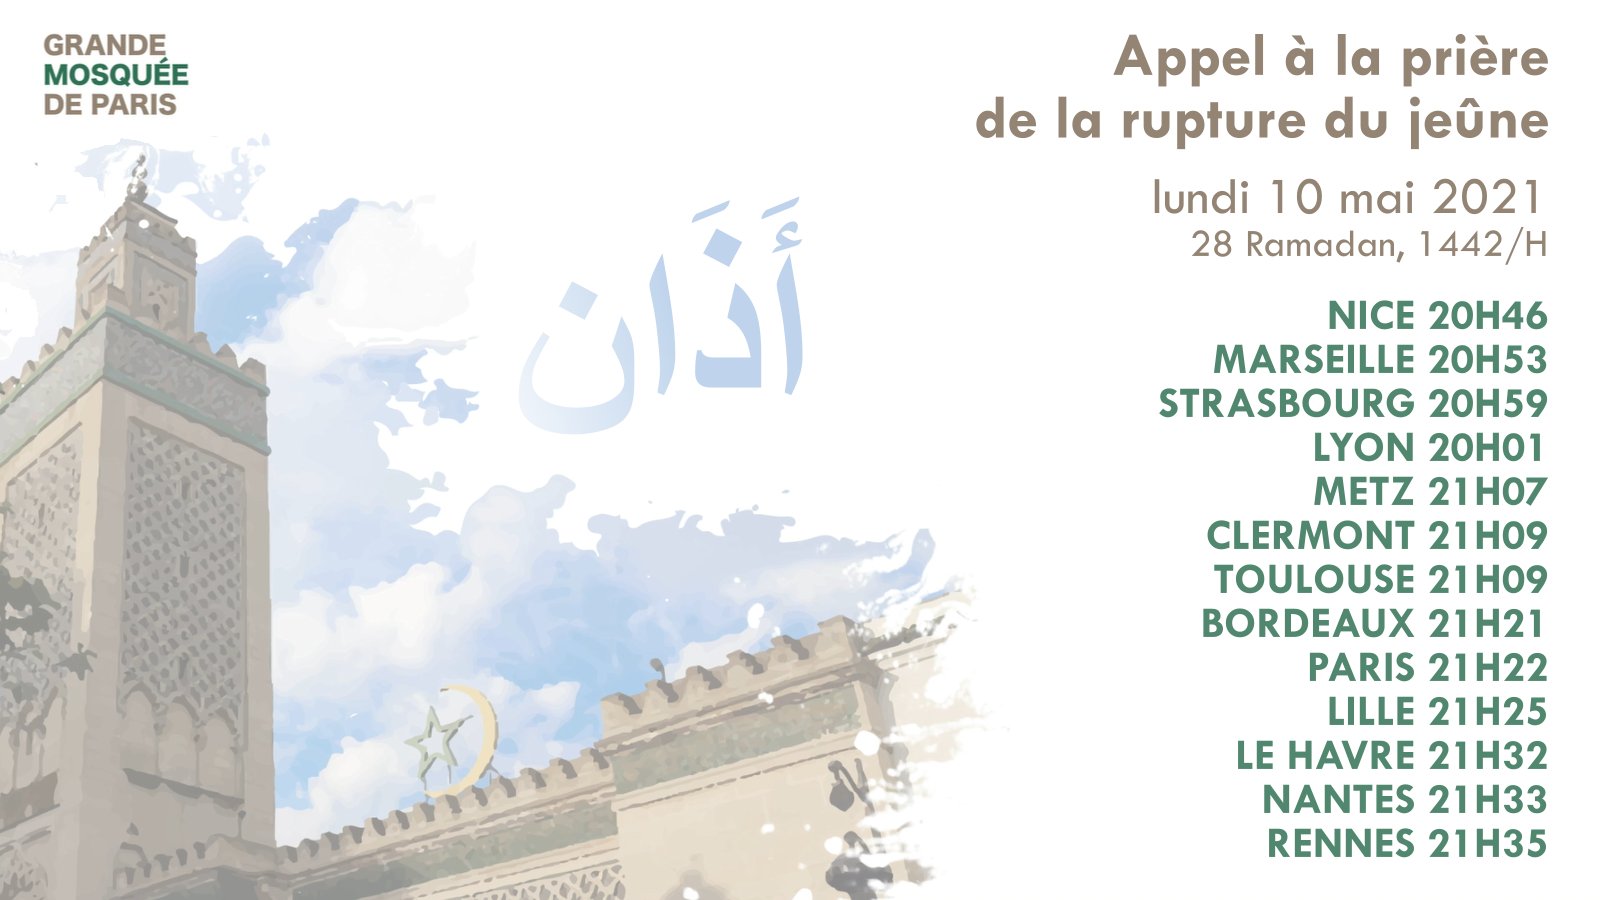 Grande Mosquée de Paris on X: Appel à la prière d'Al-Maghreb - lundi 10  mai 2021 [Paris : 21h22] #Ramadan  / X